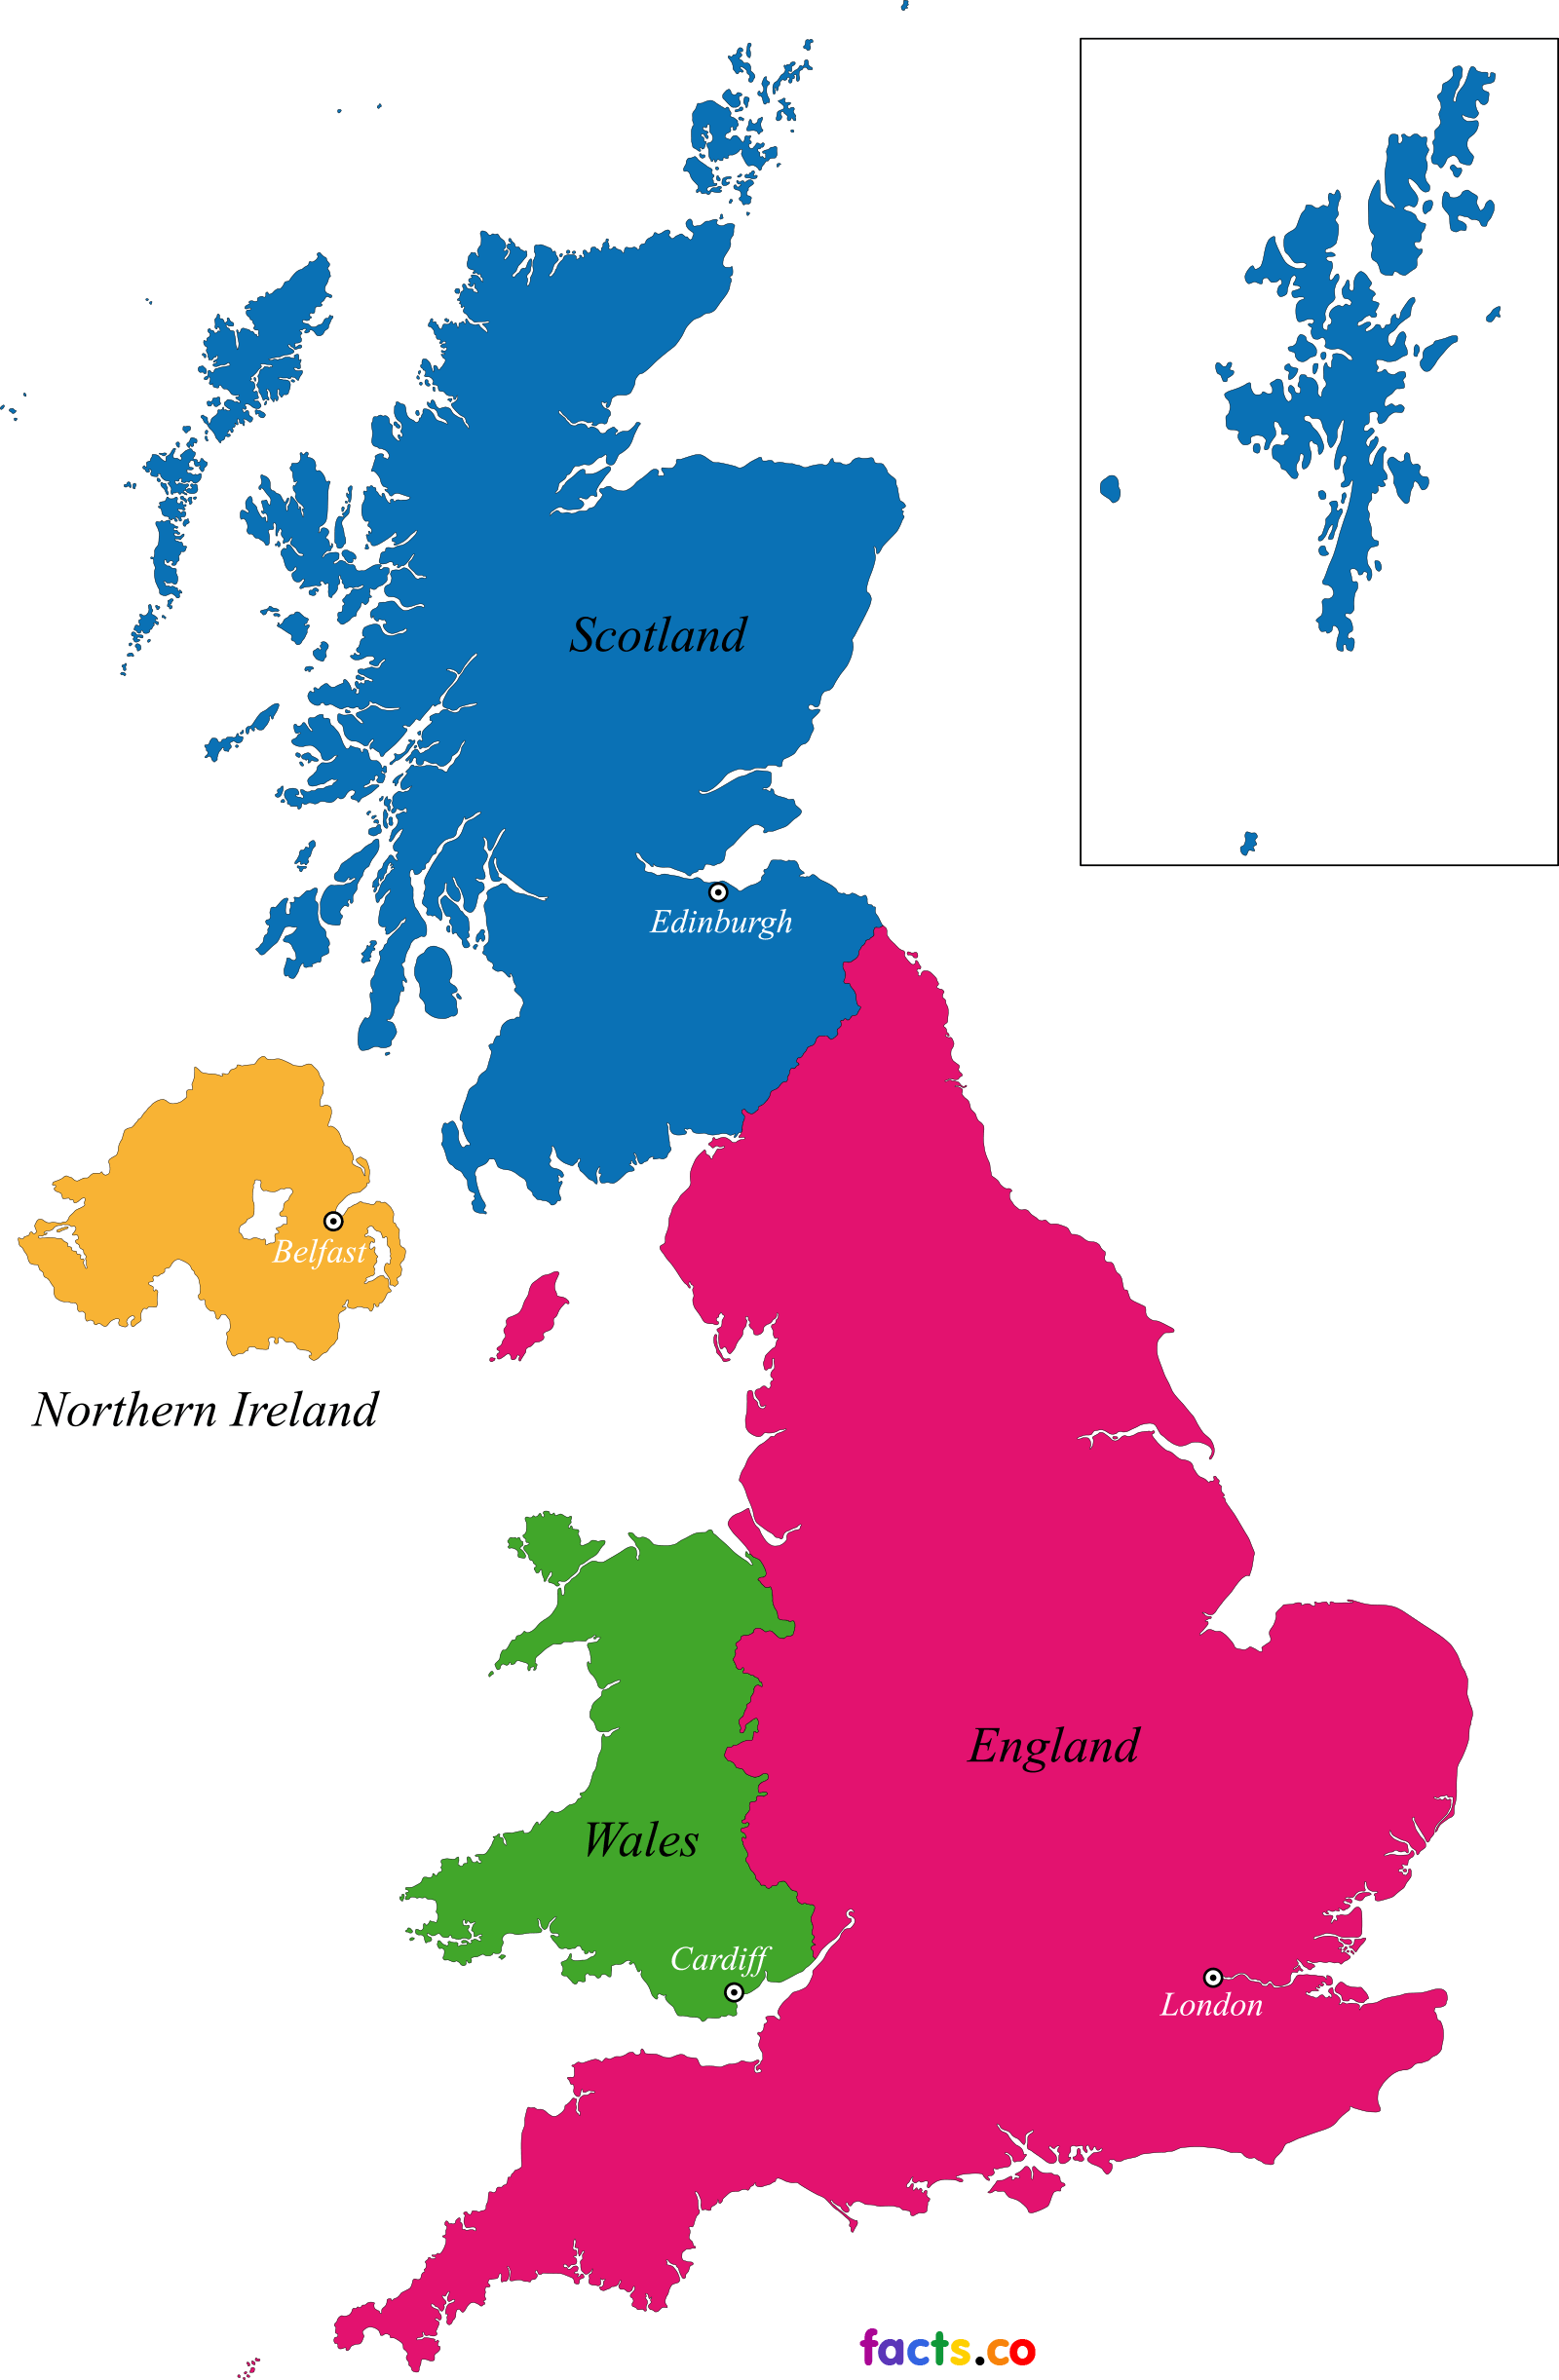 United Kingdom | ConstitutionNet1600 x 2443